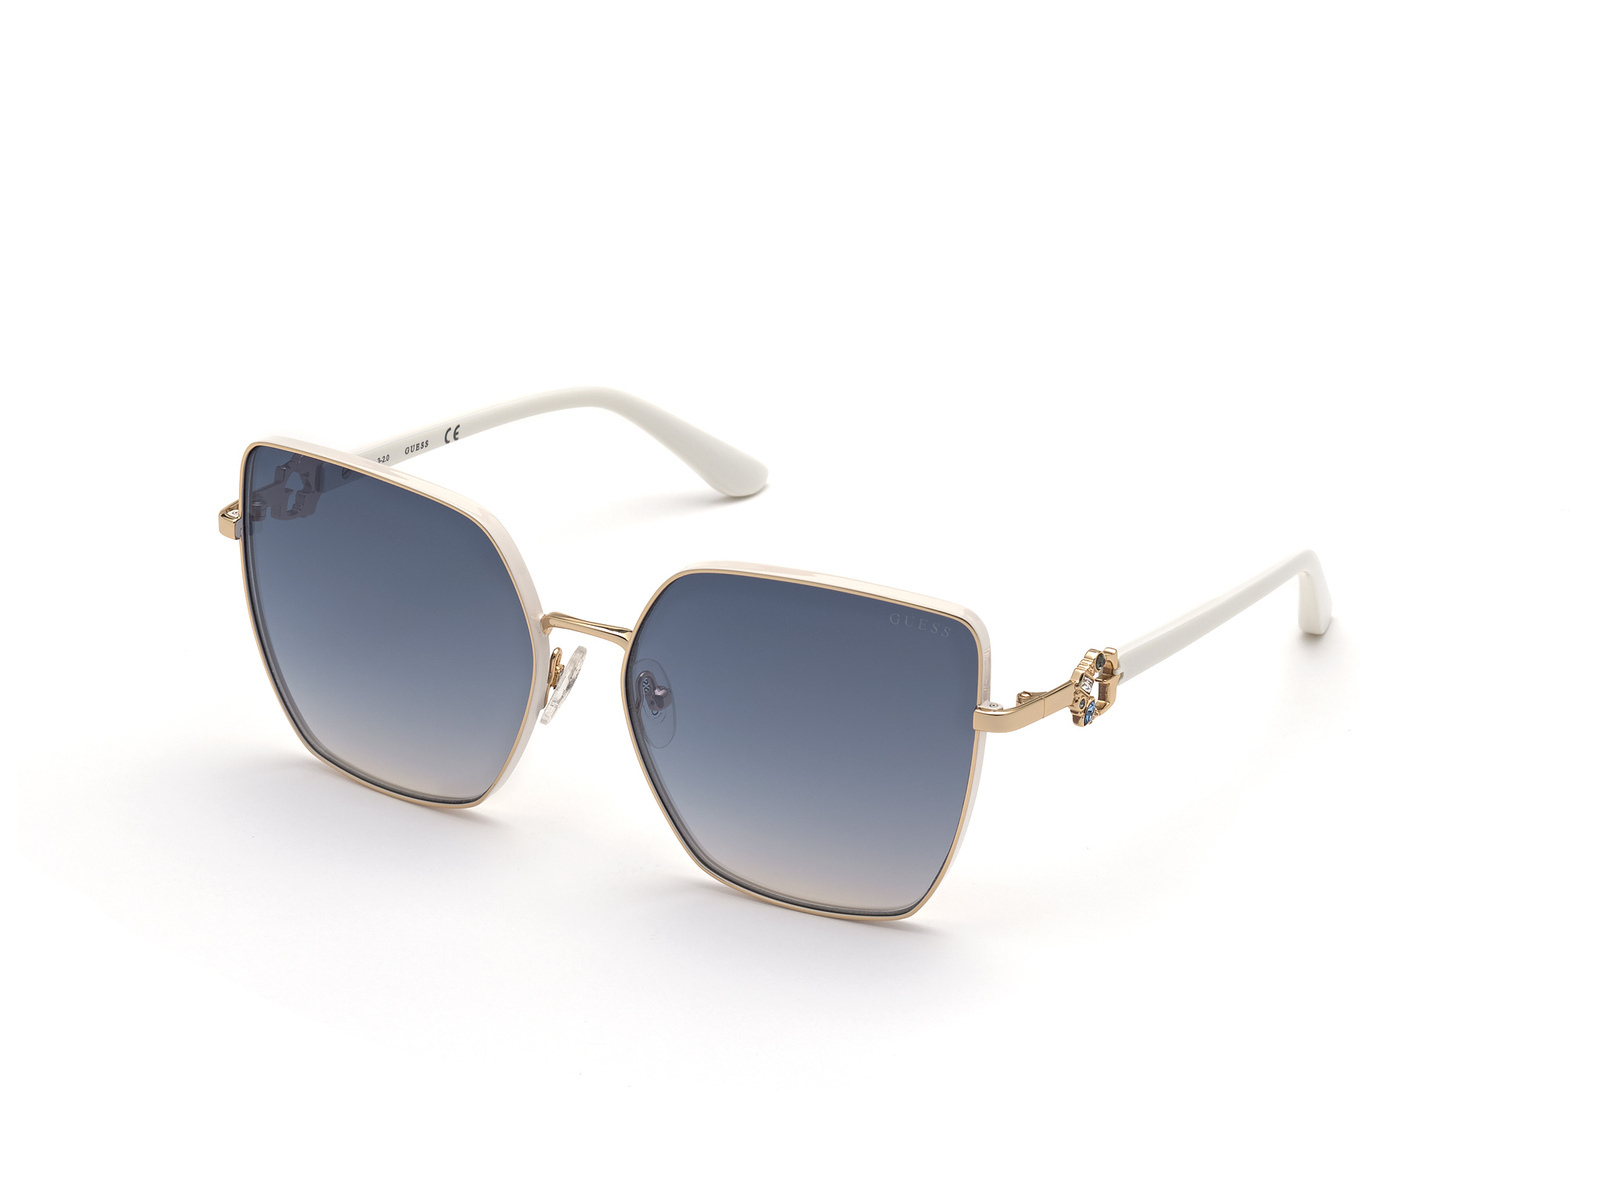 Guess Gu7790-s Sunglasses Shiny Light Nickeltin Womens Accessories Sunglasses Gradient Blue 